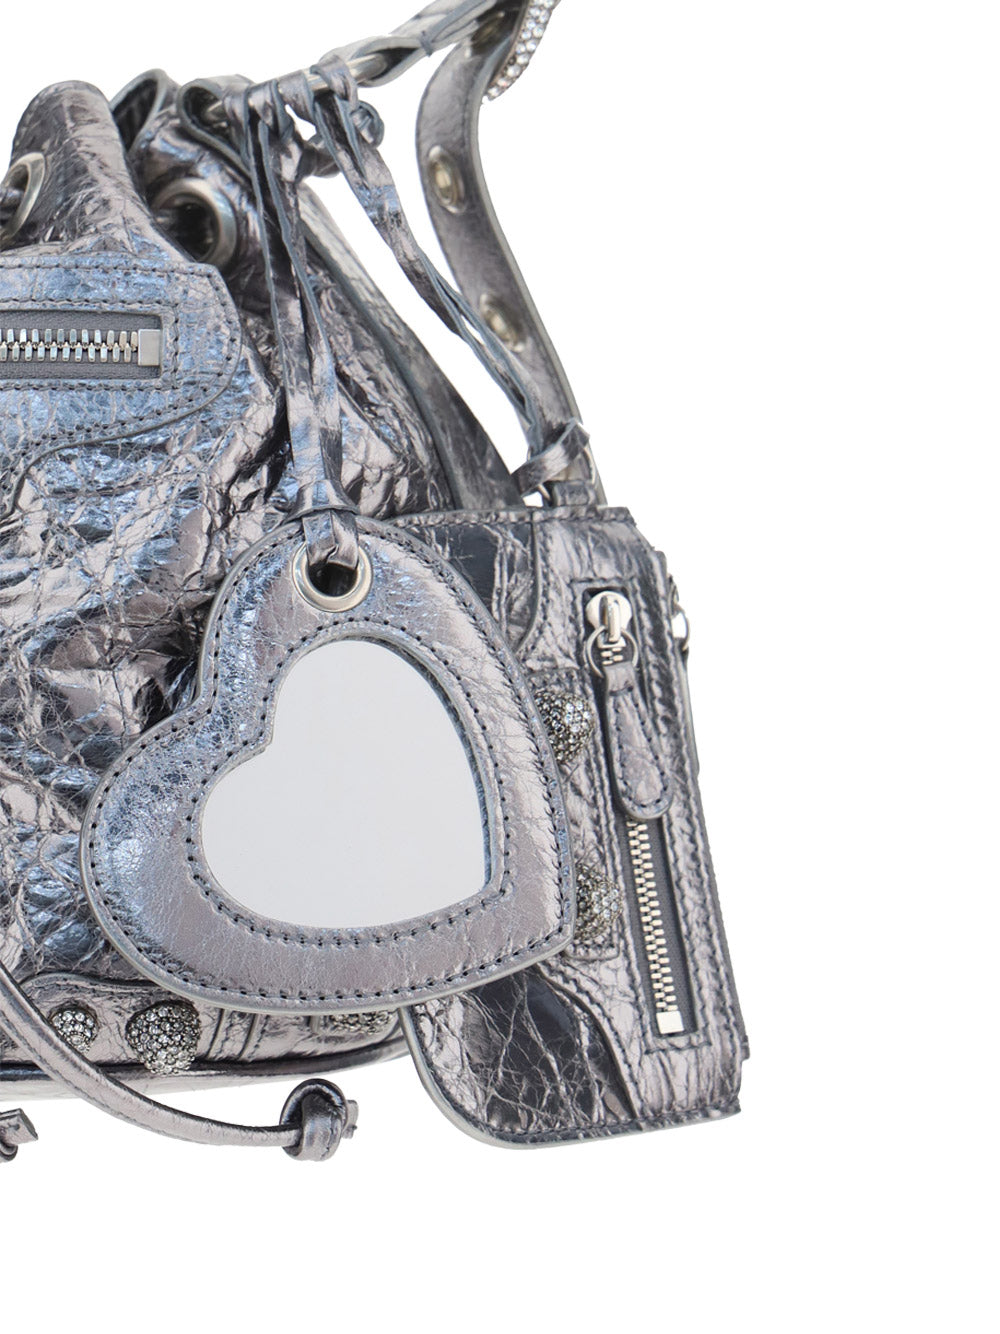 Le Cagole Xs Bucket Bag With Rhinestones - Silver